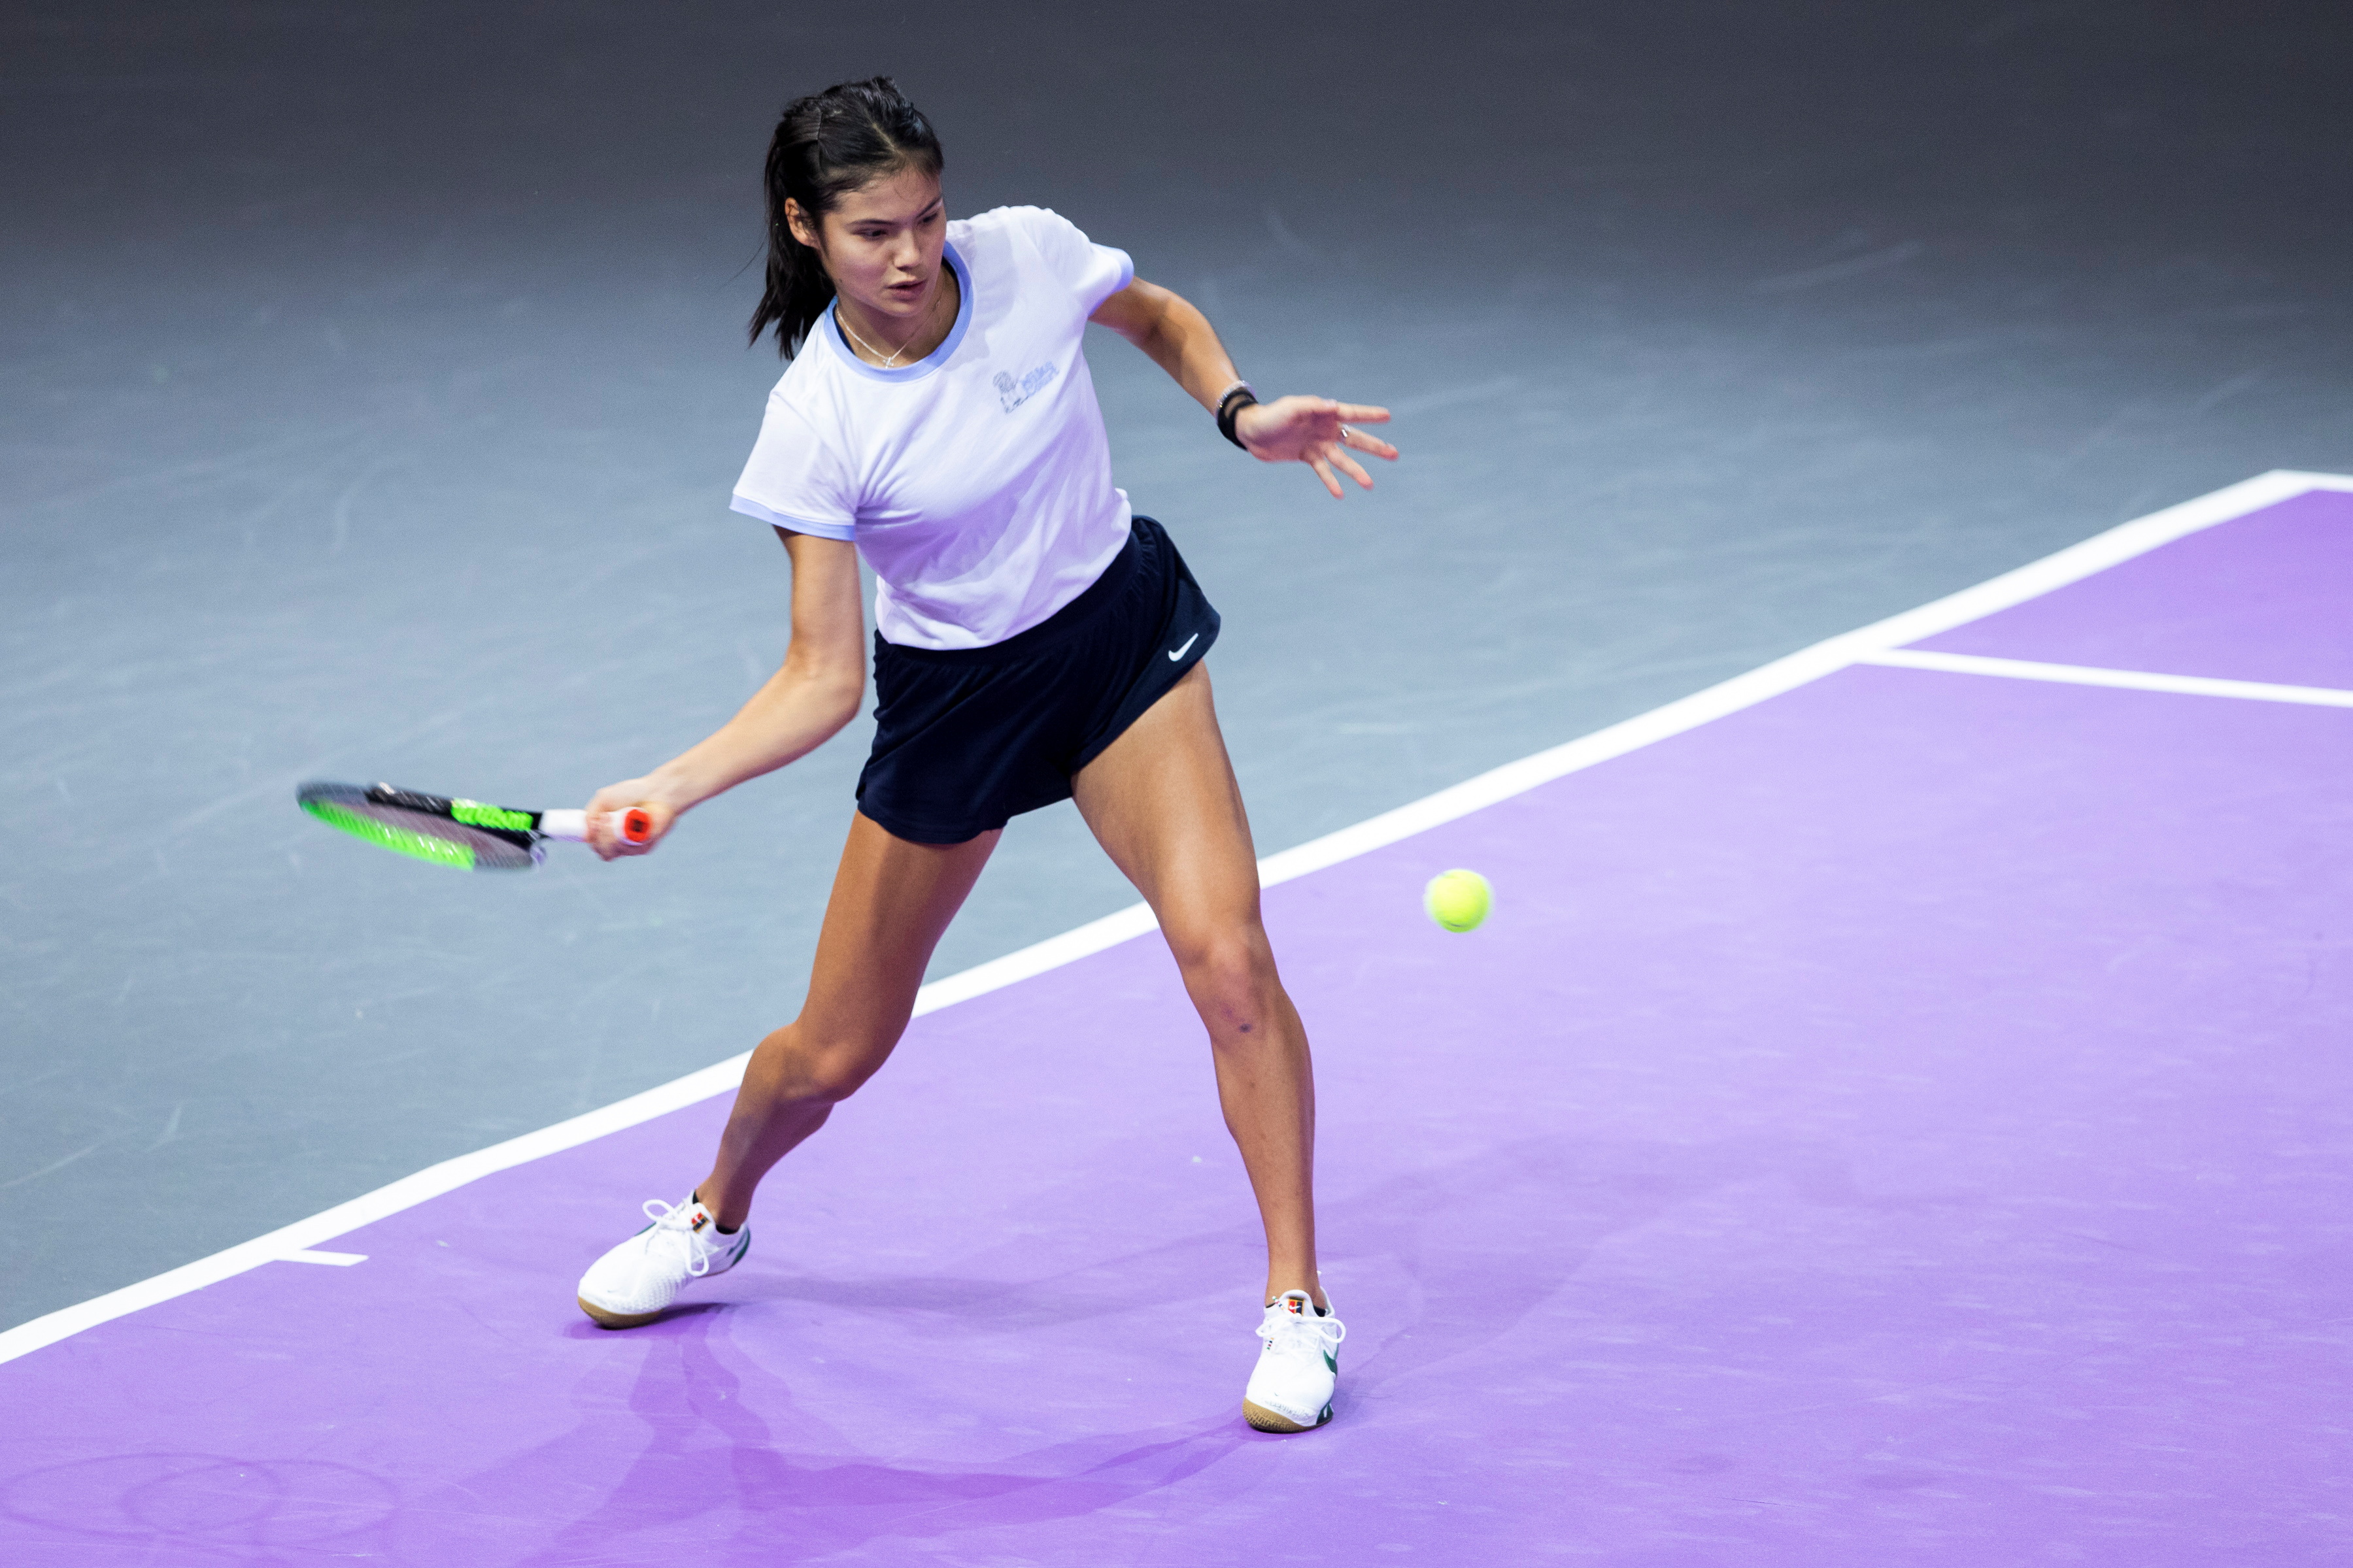 British tennis player Emma Raducanu trains during the WTA Transylvania Open tennis tournament